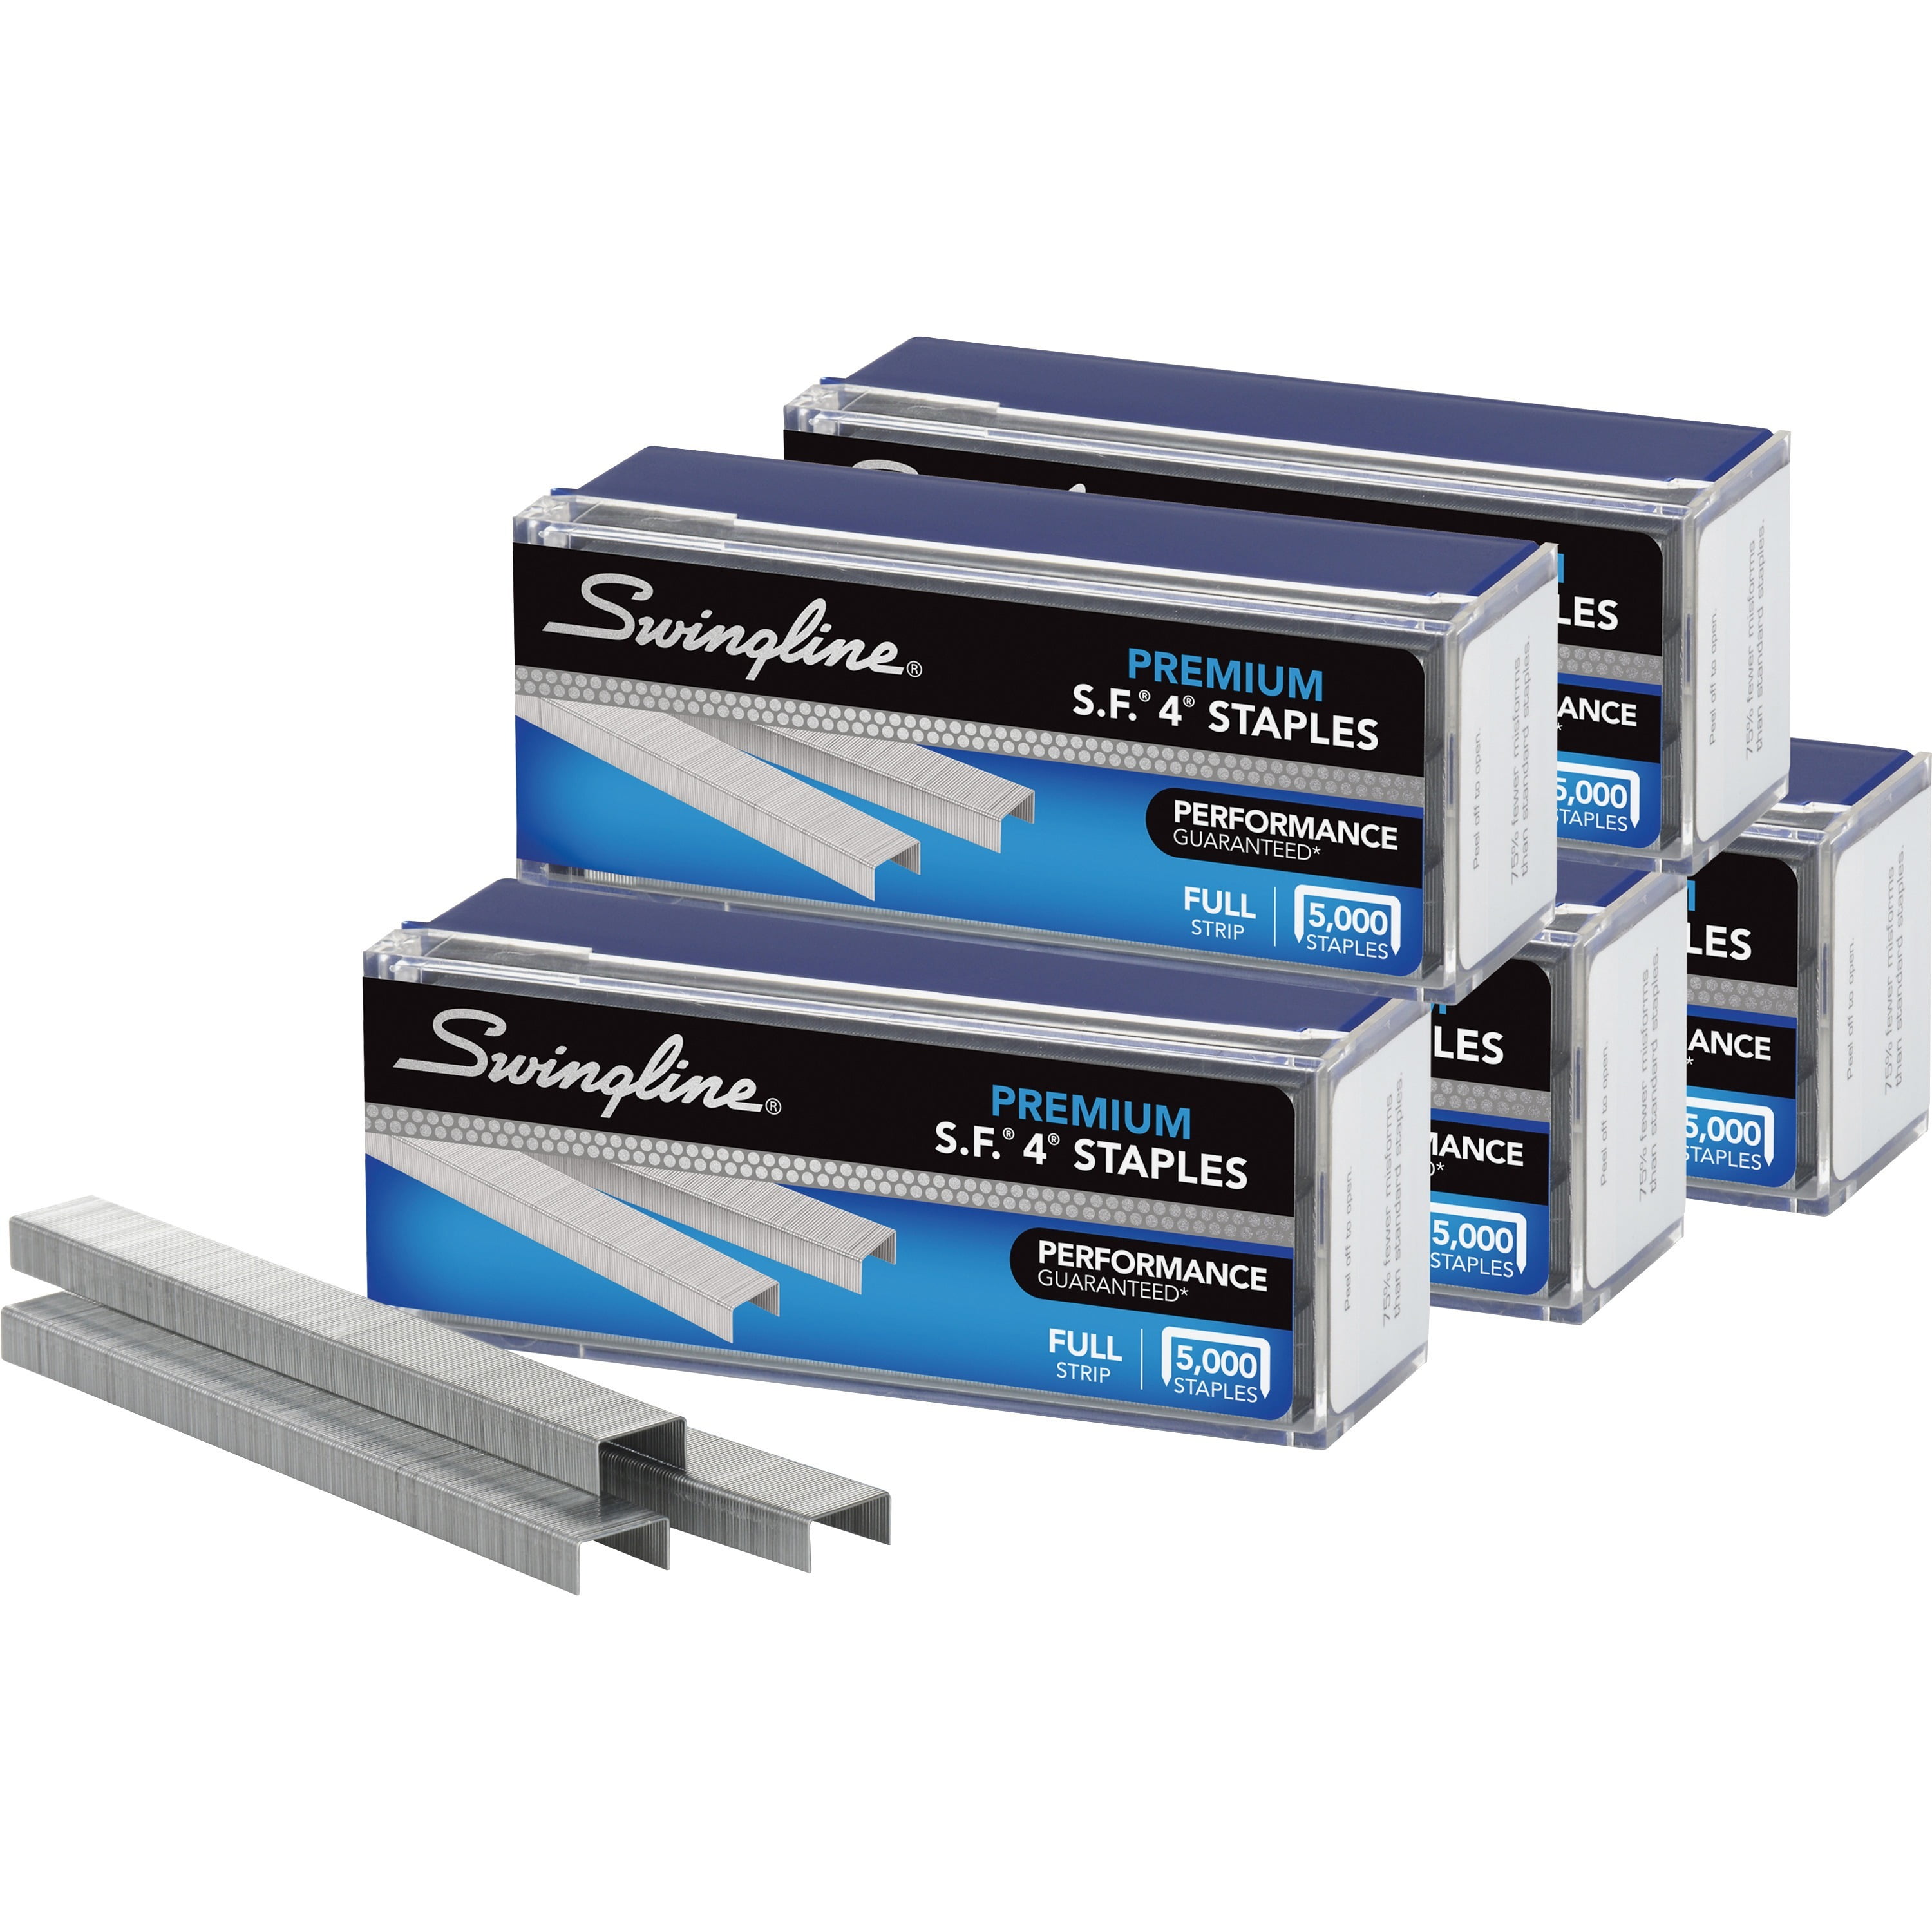 Chisel Point 1/4" Details about   Swingline 35450 SF4 Premium Staples Case of 100,000 Staples 